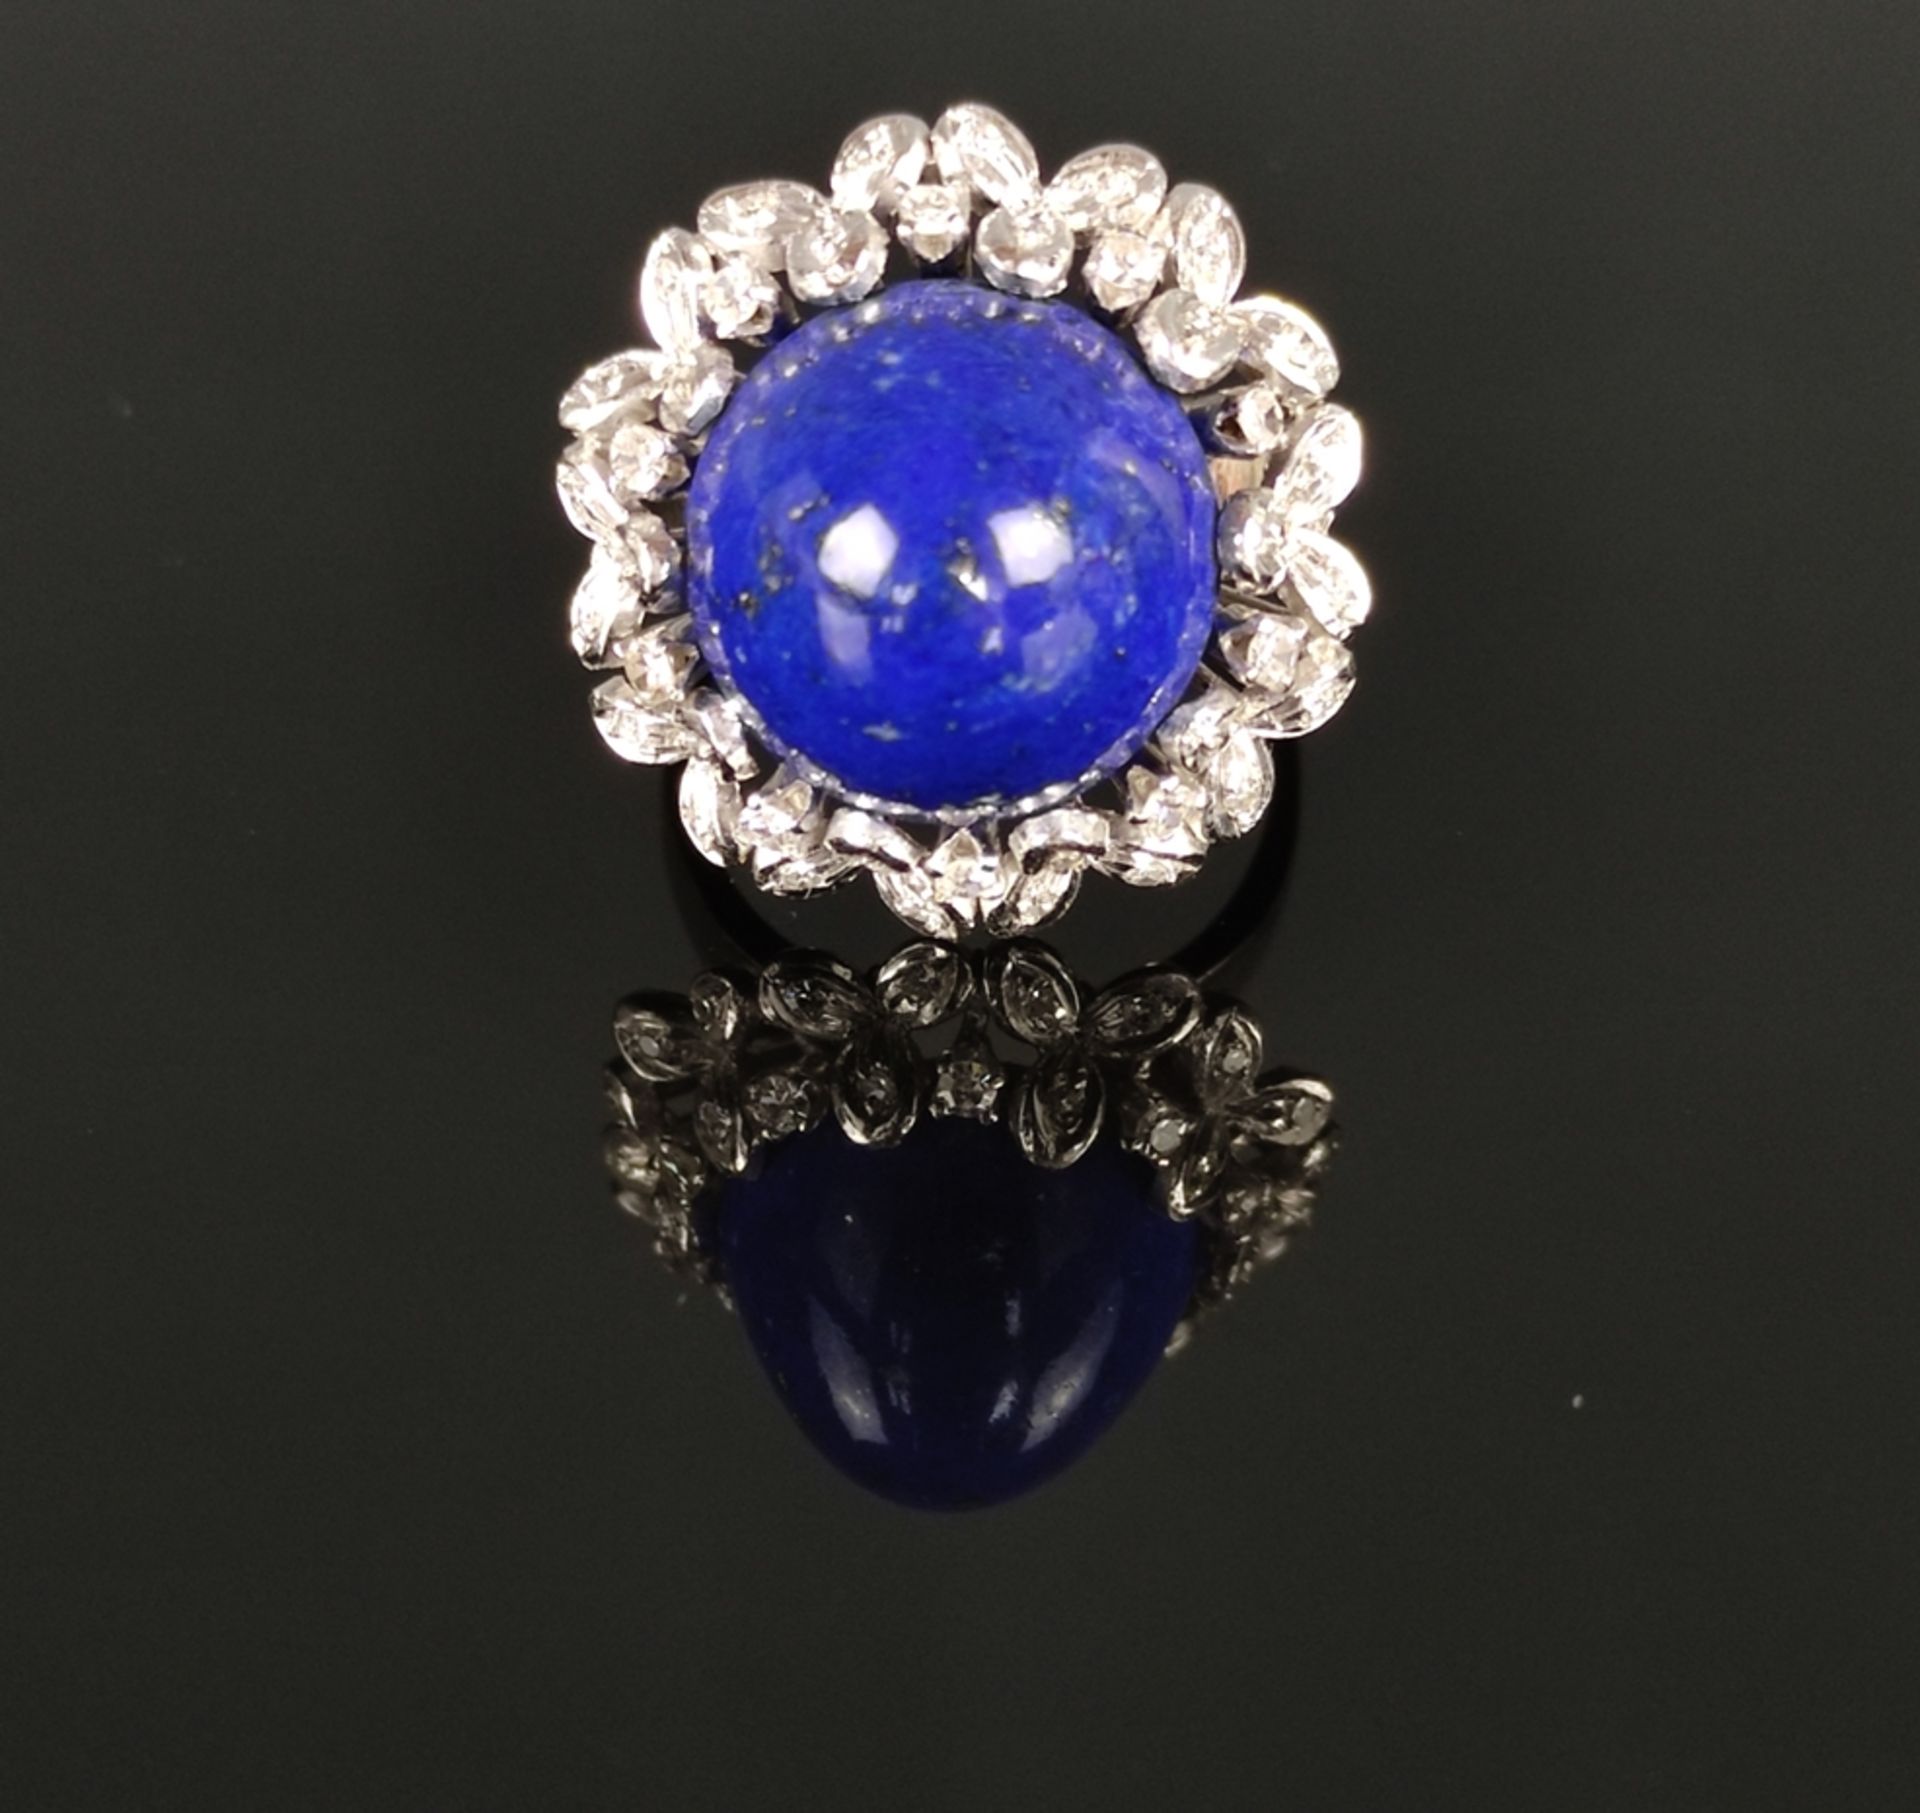 Lapis lazuli diamond ring, cone-shaped lapis lazuli set by 40 brilliant-cut diamonds as a flower wr - Image 2 of 4